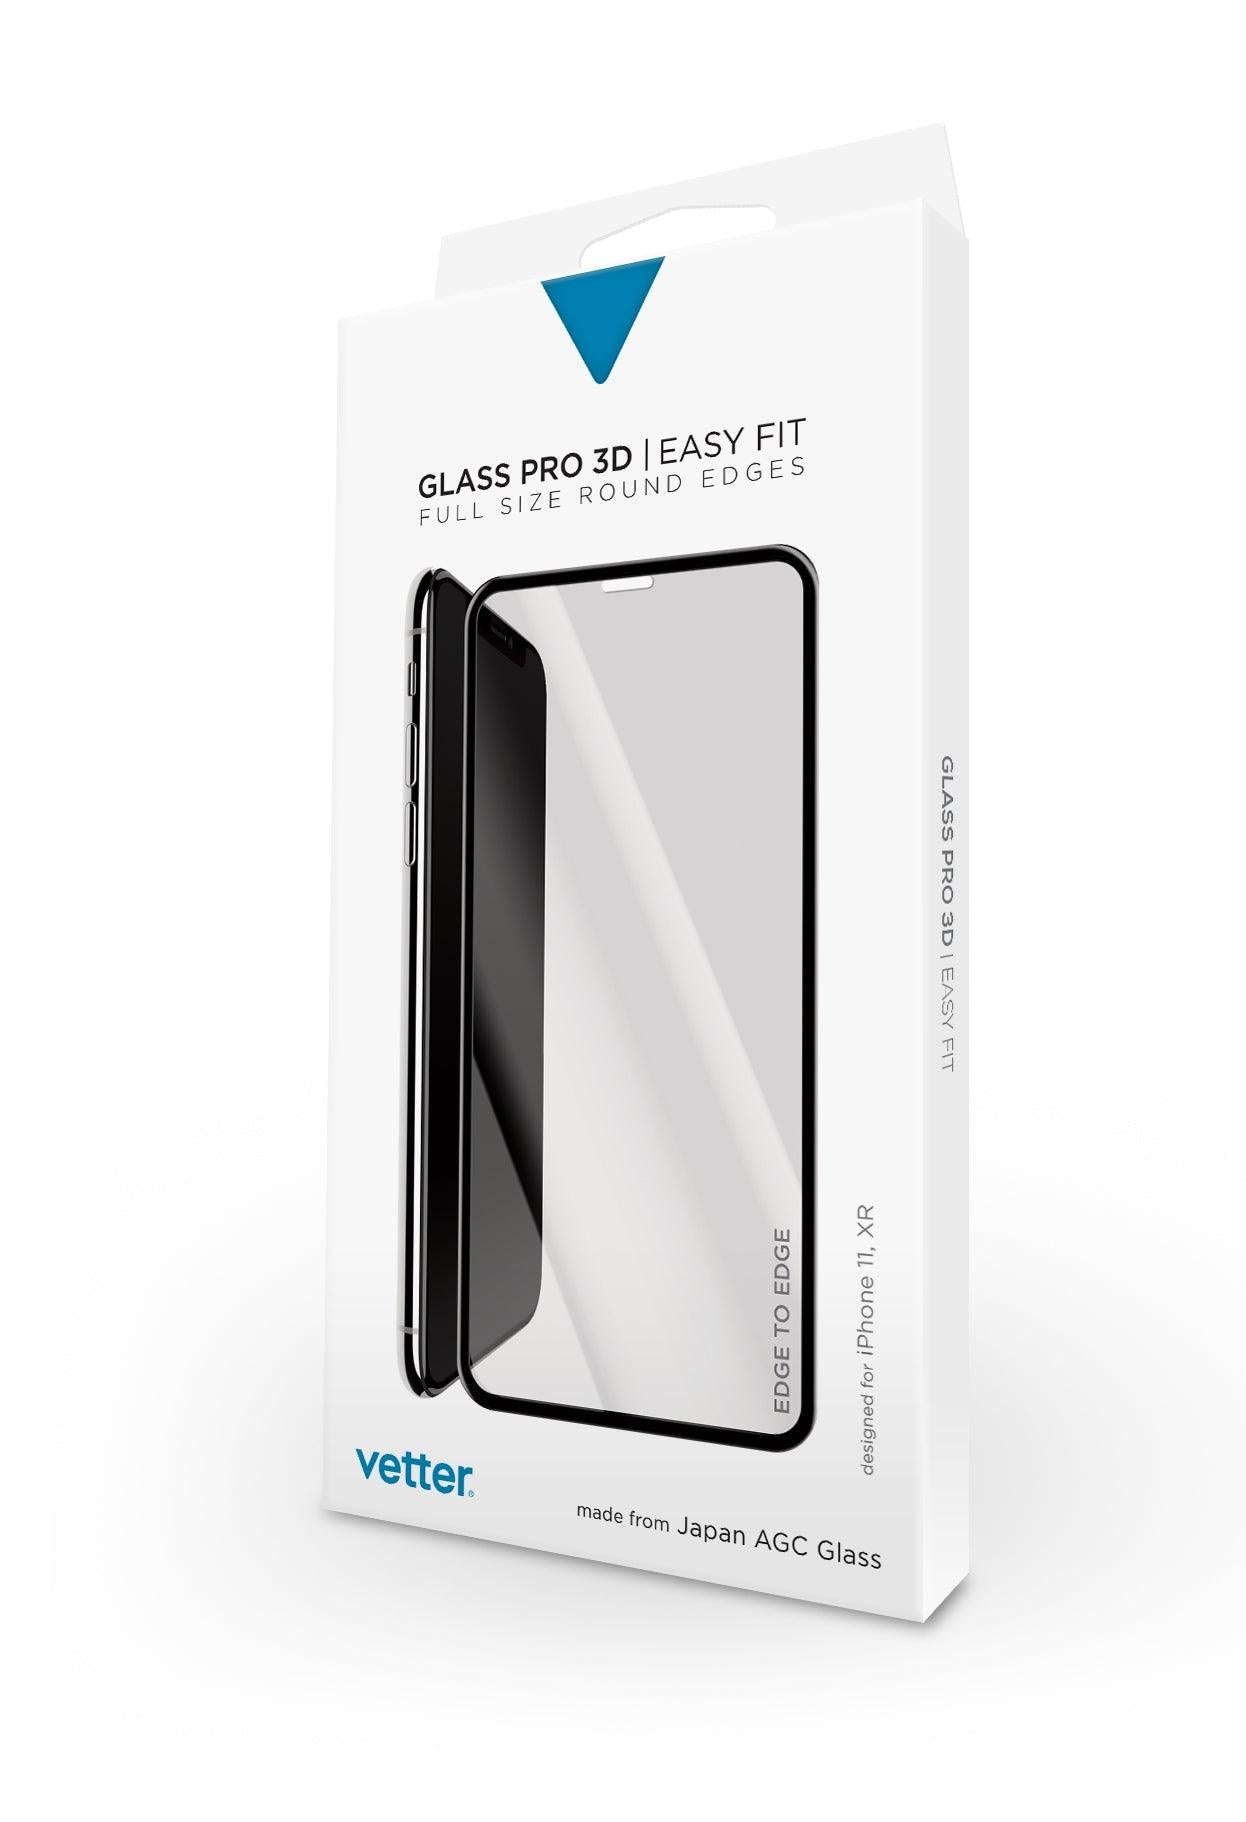 Folie Protectie Ecran iPhone 11, 3D Tempered Glass Easy Fit, Negru - vetter.ro